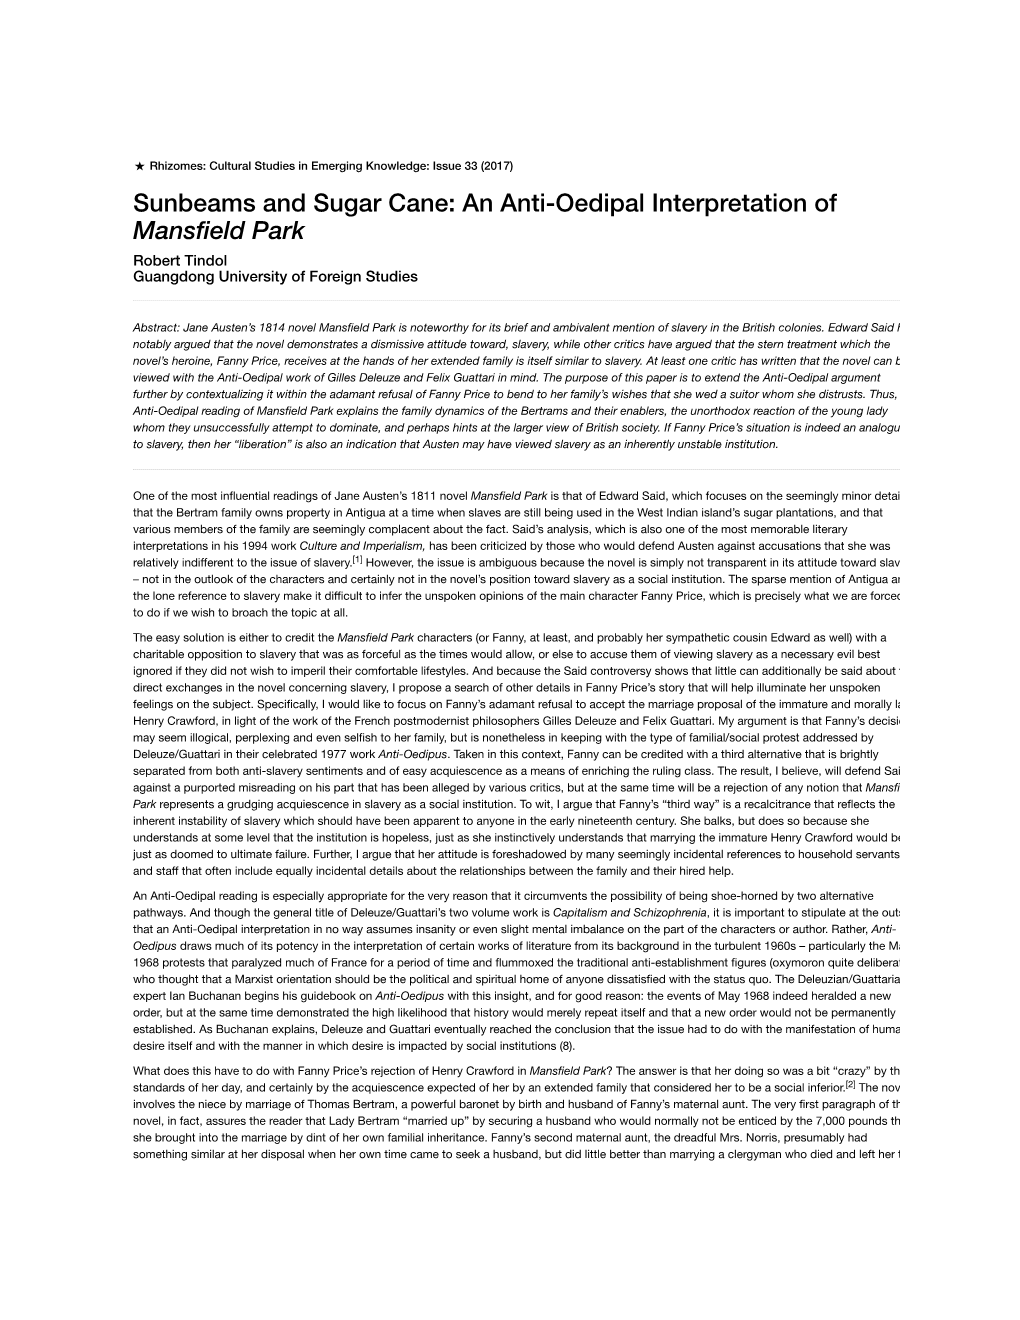 Sunbeams and Sugar Cane: an Anti-Oedipal Interpretation of Mansfield Park Robert Tindol Guangdong University of Foreign Studies